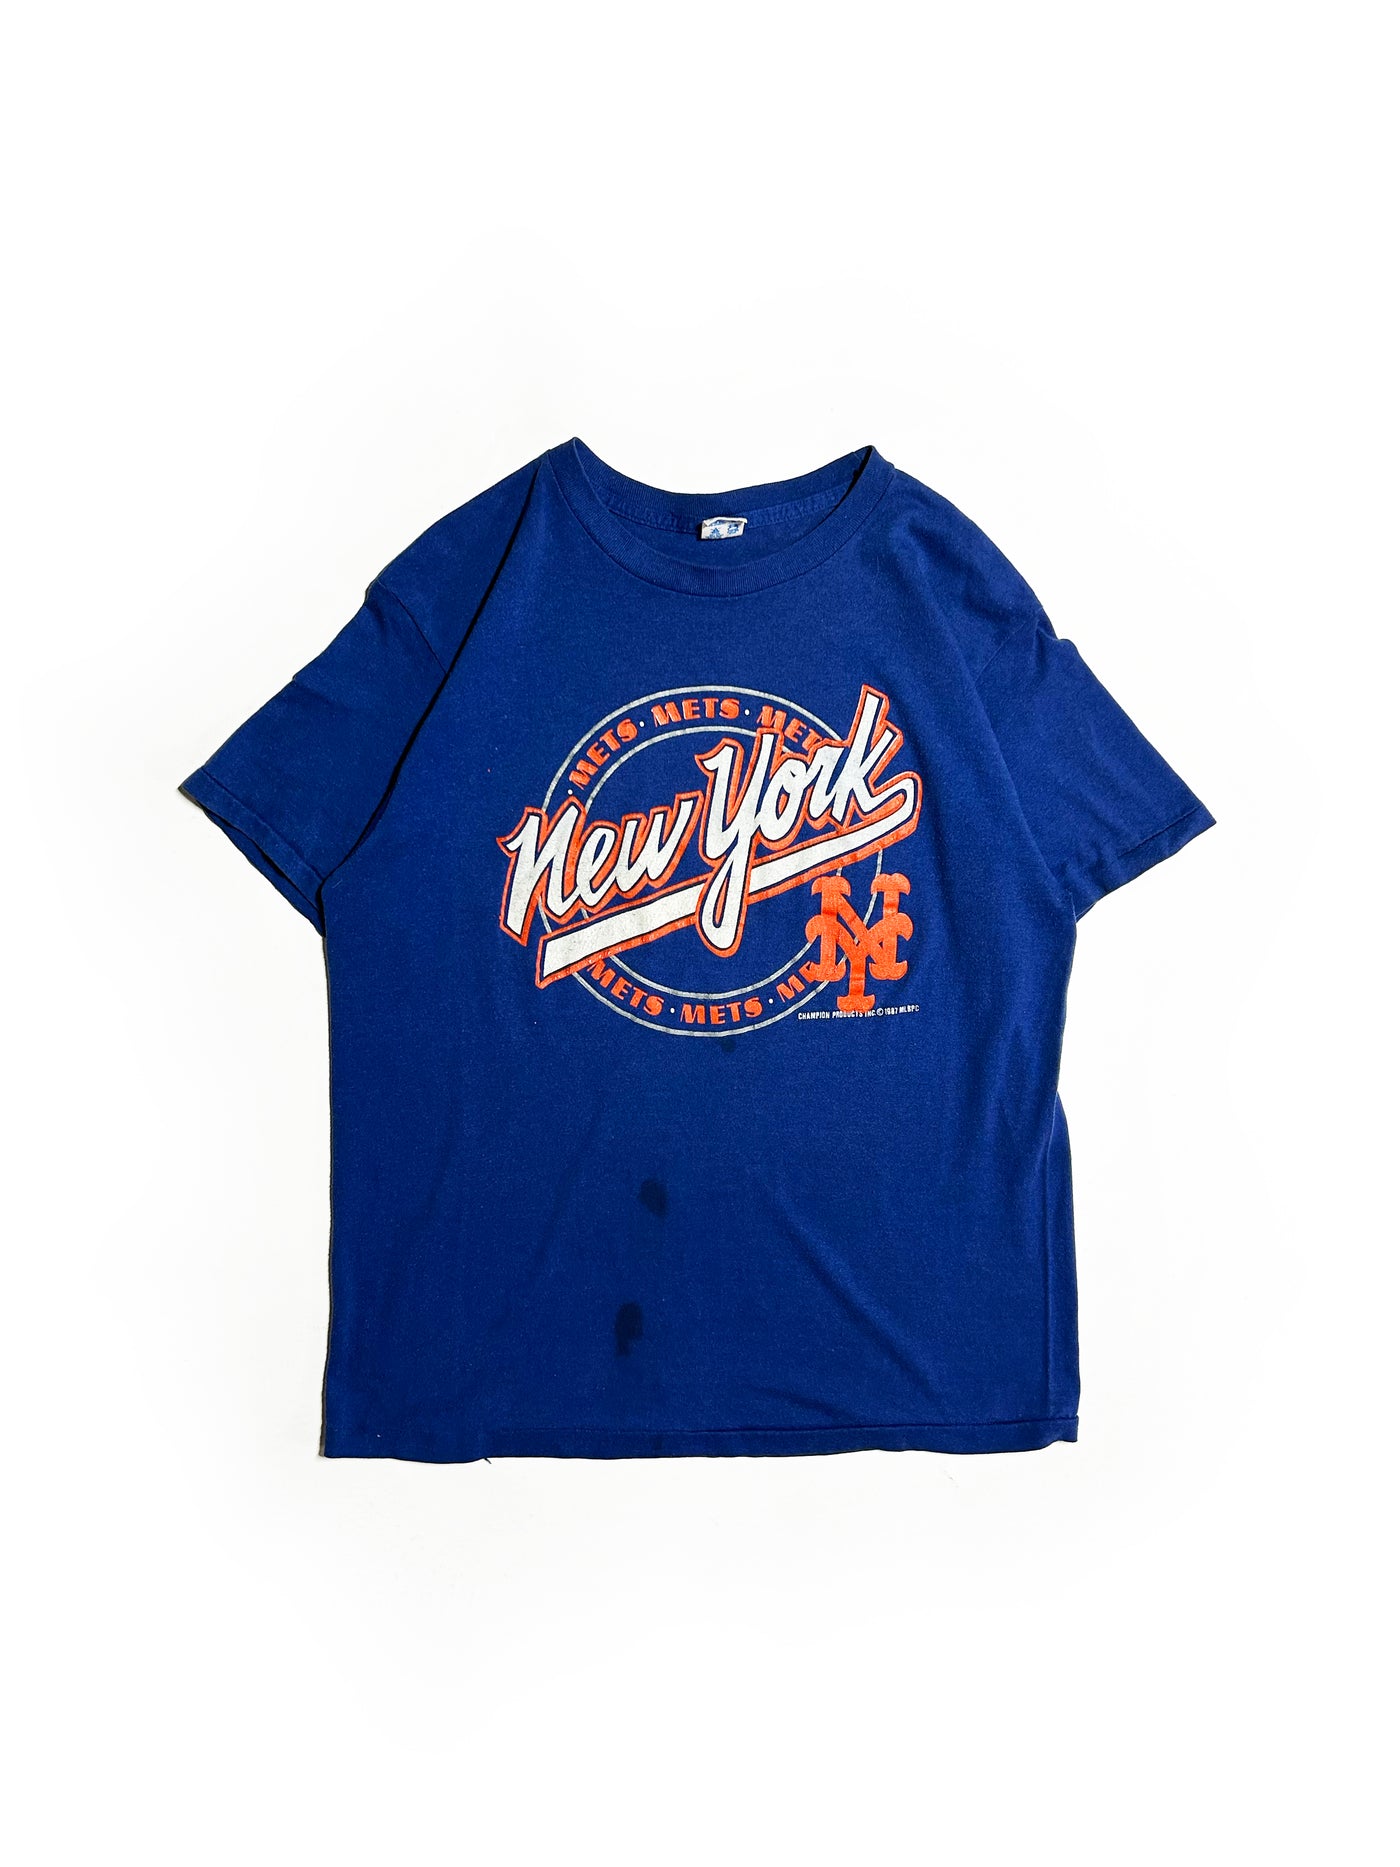 Vintage 1987 New York Mets Distressed T-Shirt